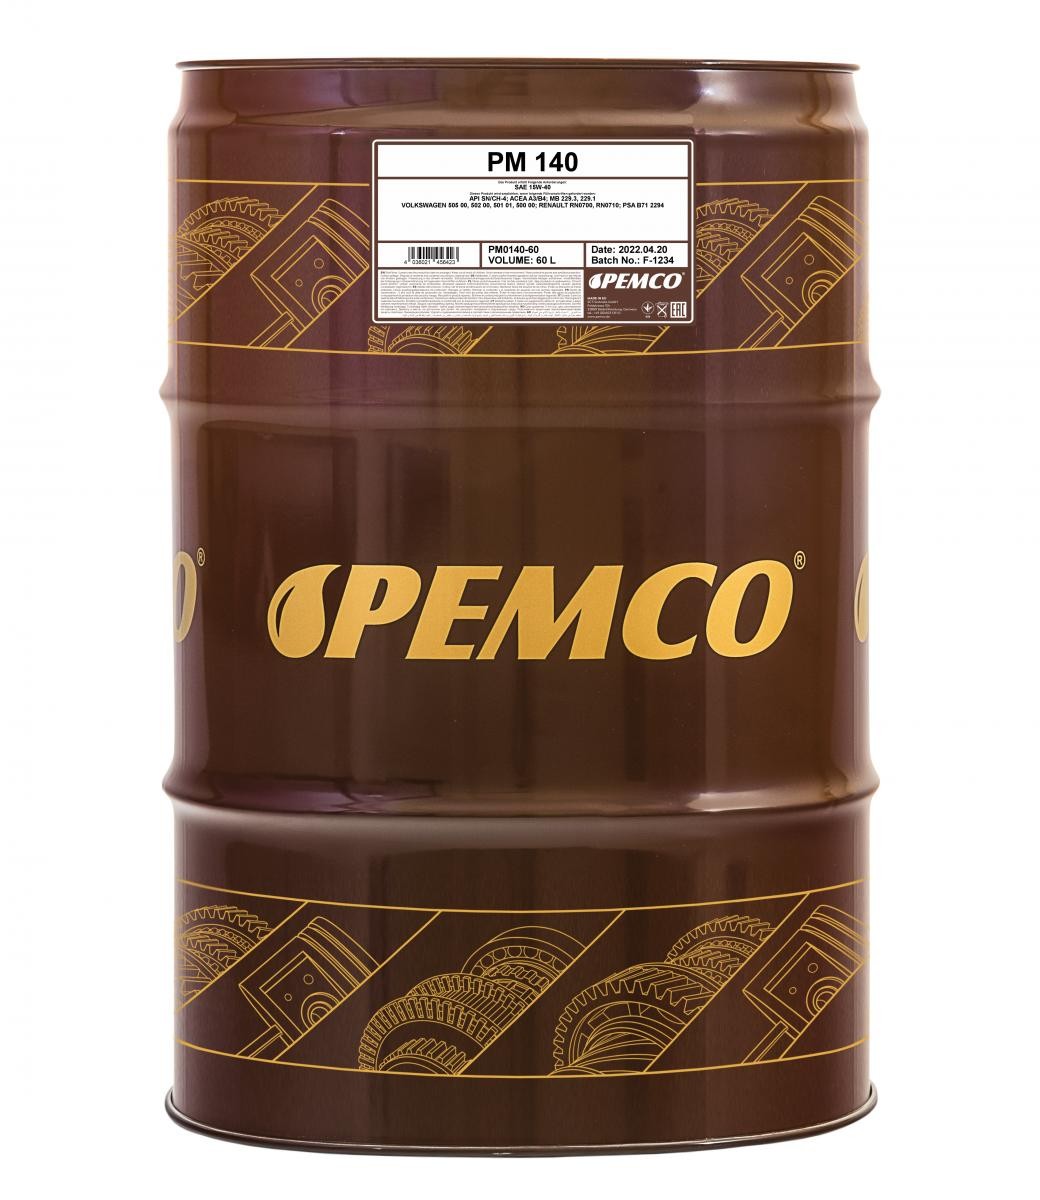 PM0140-60 PEMCO Oil VOLVO 15W-40, 60l, Mineral Oil